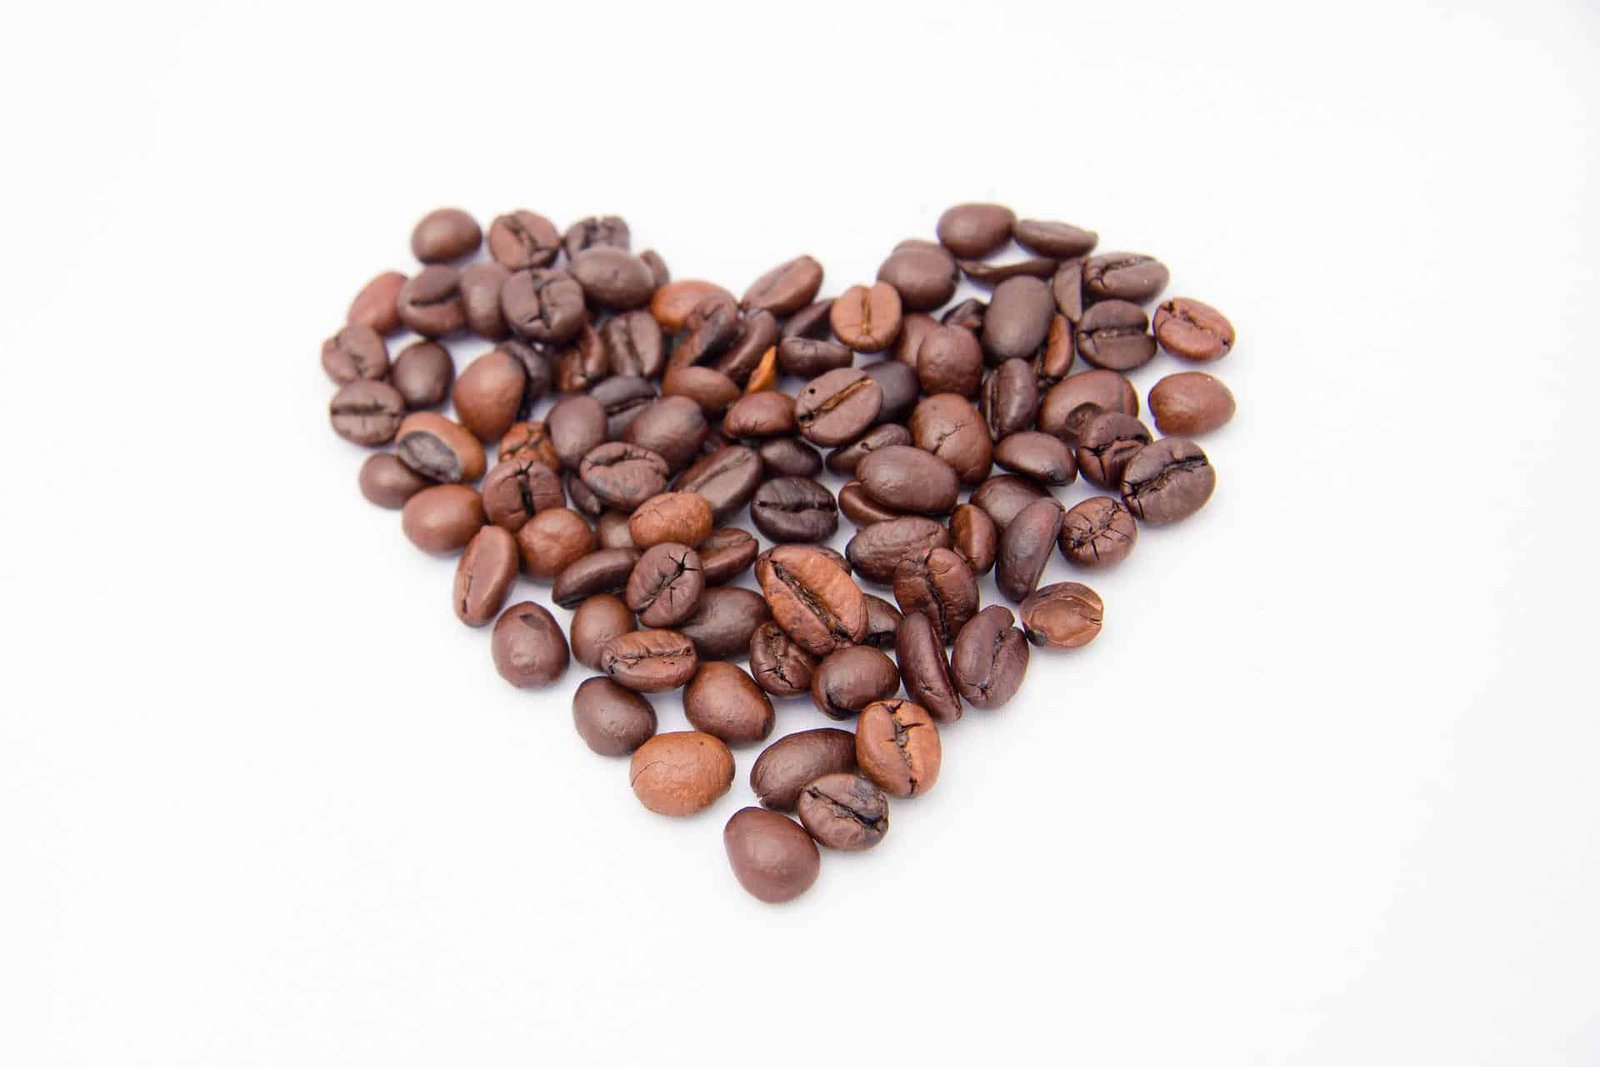 Coffee has many health benefits